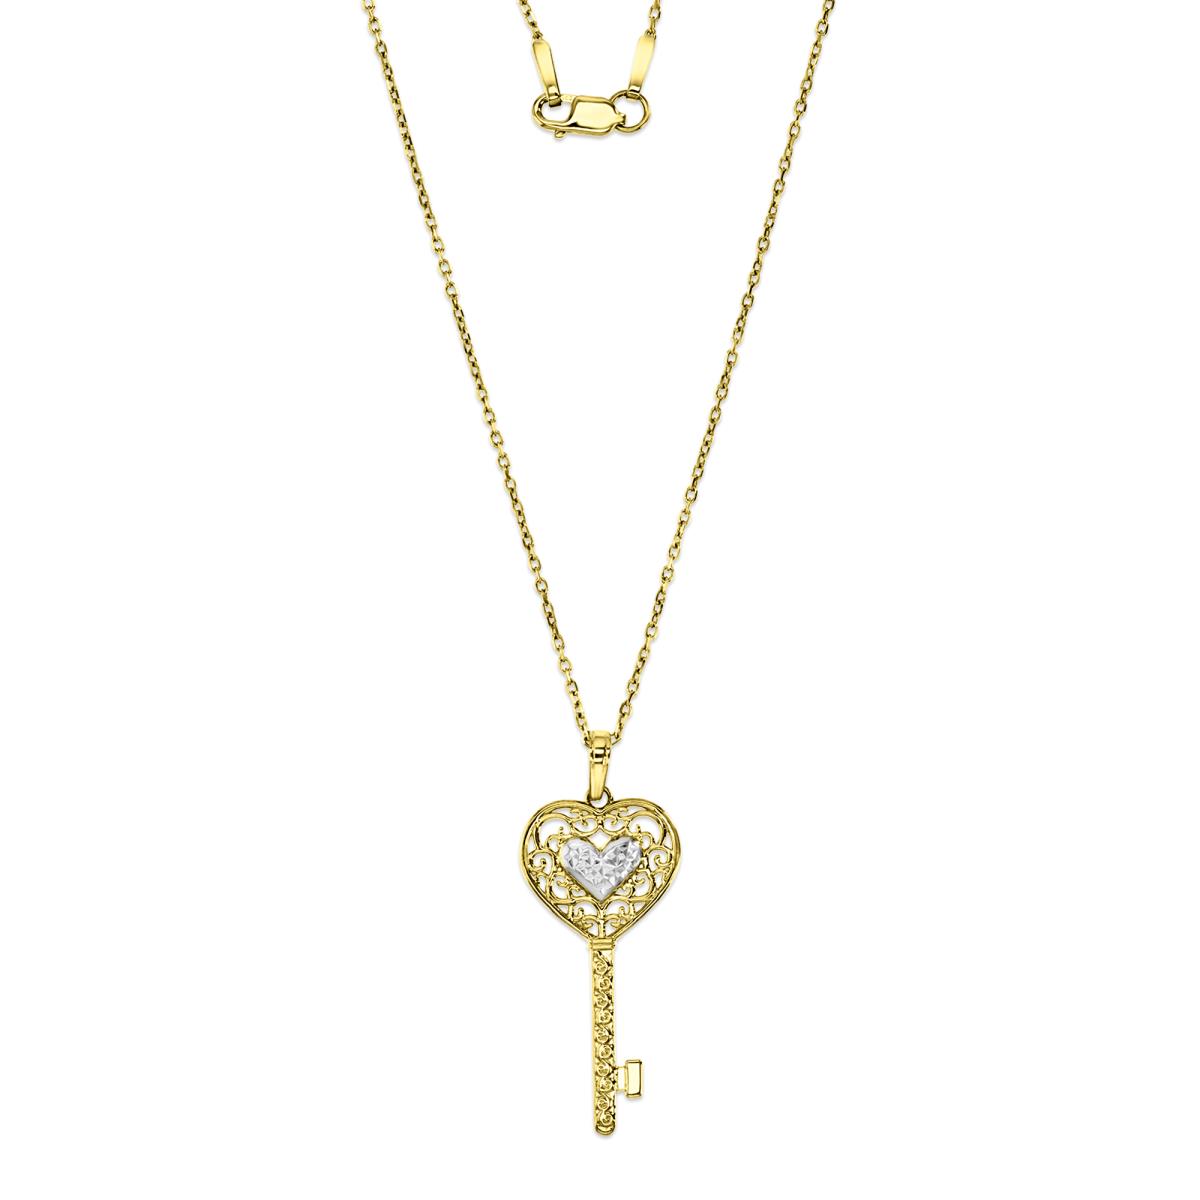 10K Yellow & White Gold 30mm Heart Key Polished & Diamond Cut 18" Necklace